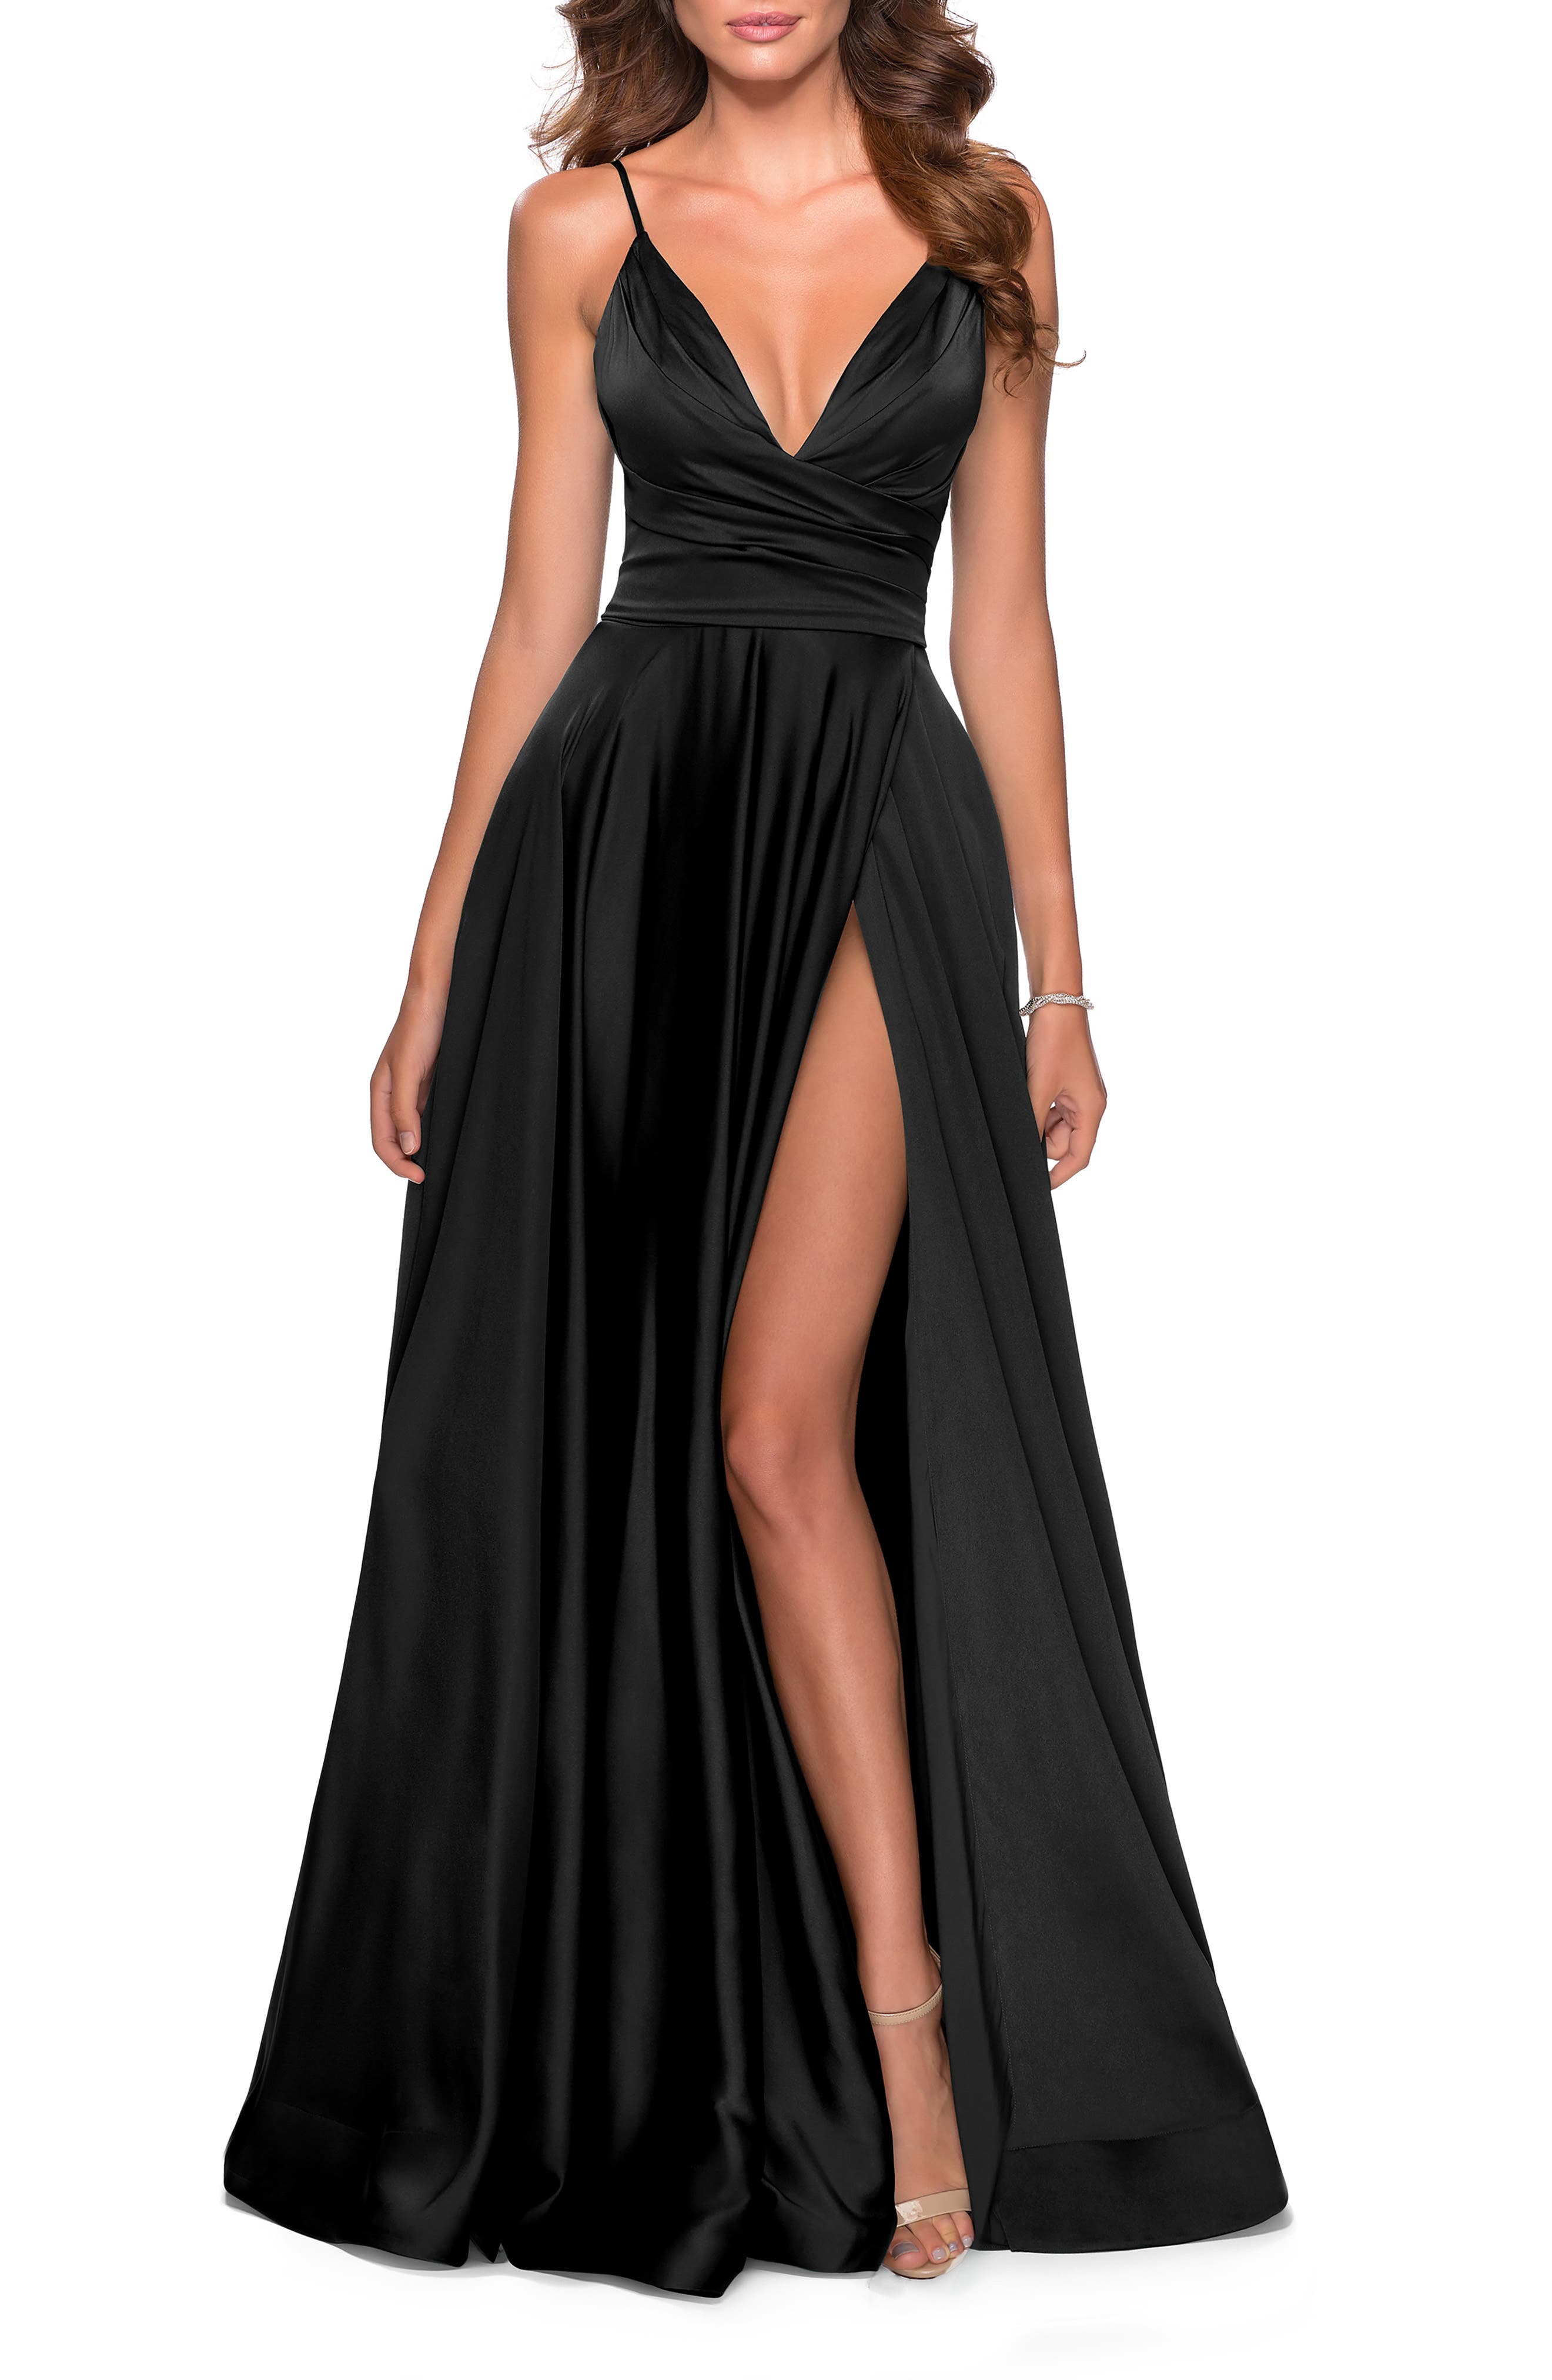 black formal long dress